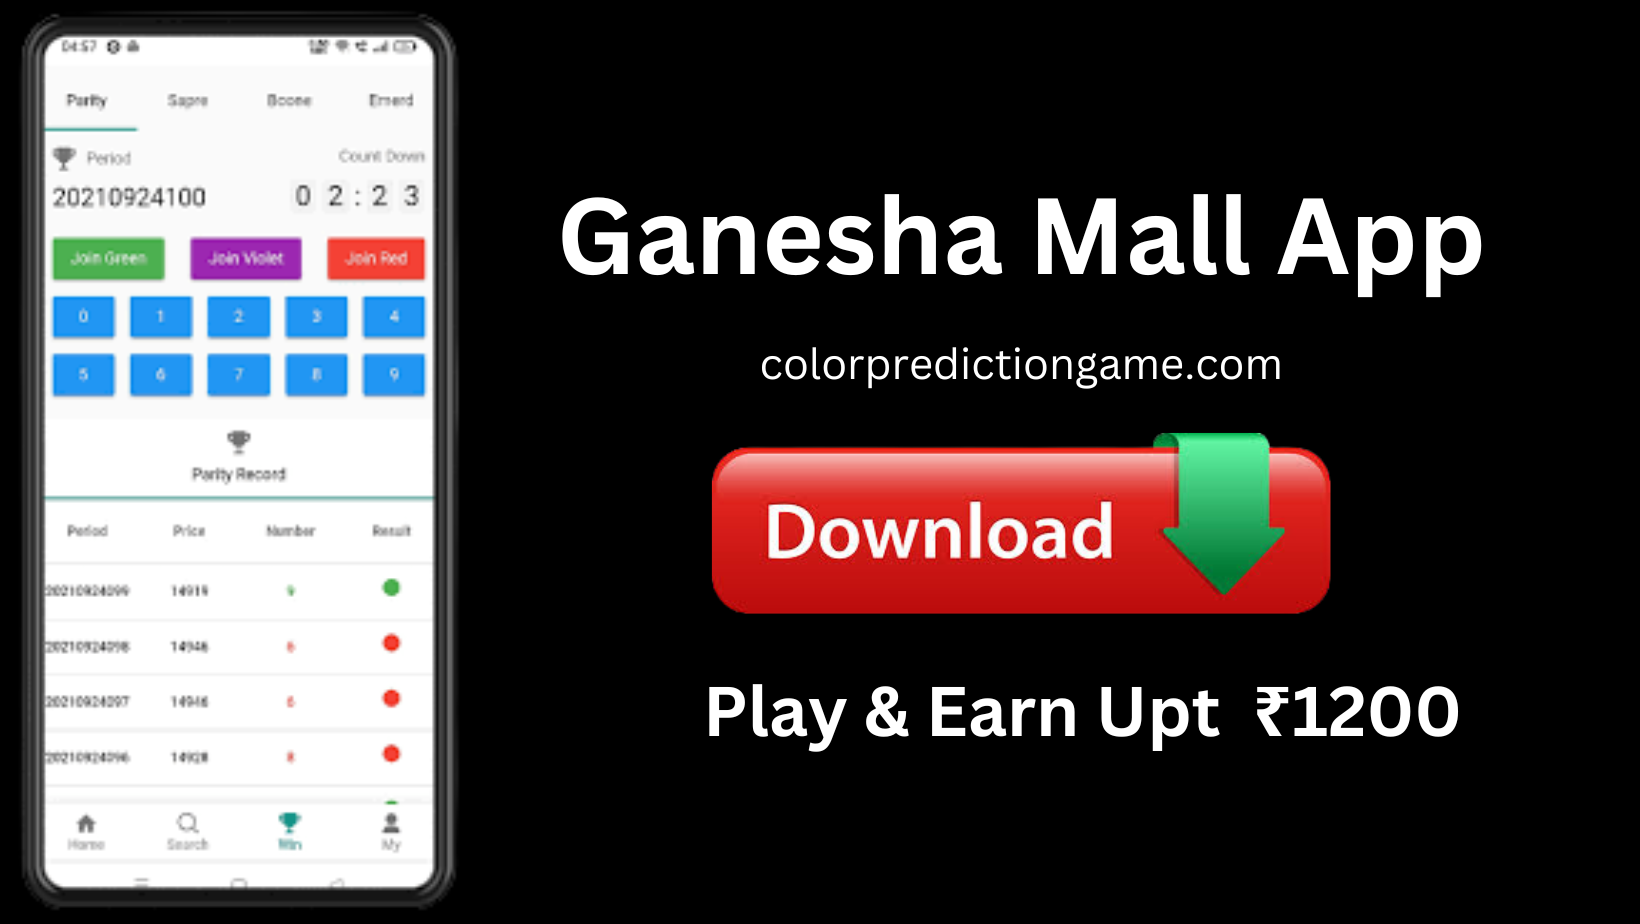 Ganesha Mall App